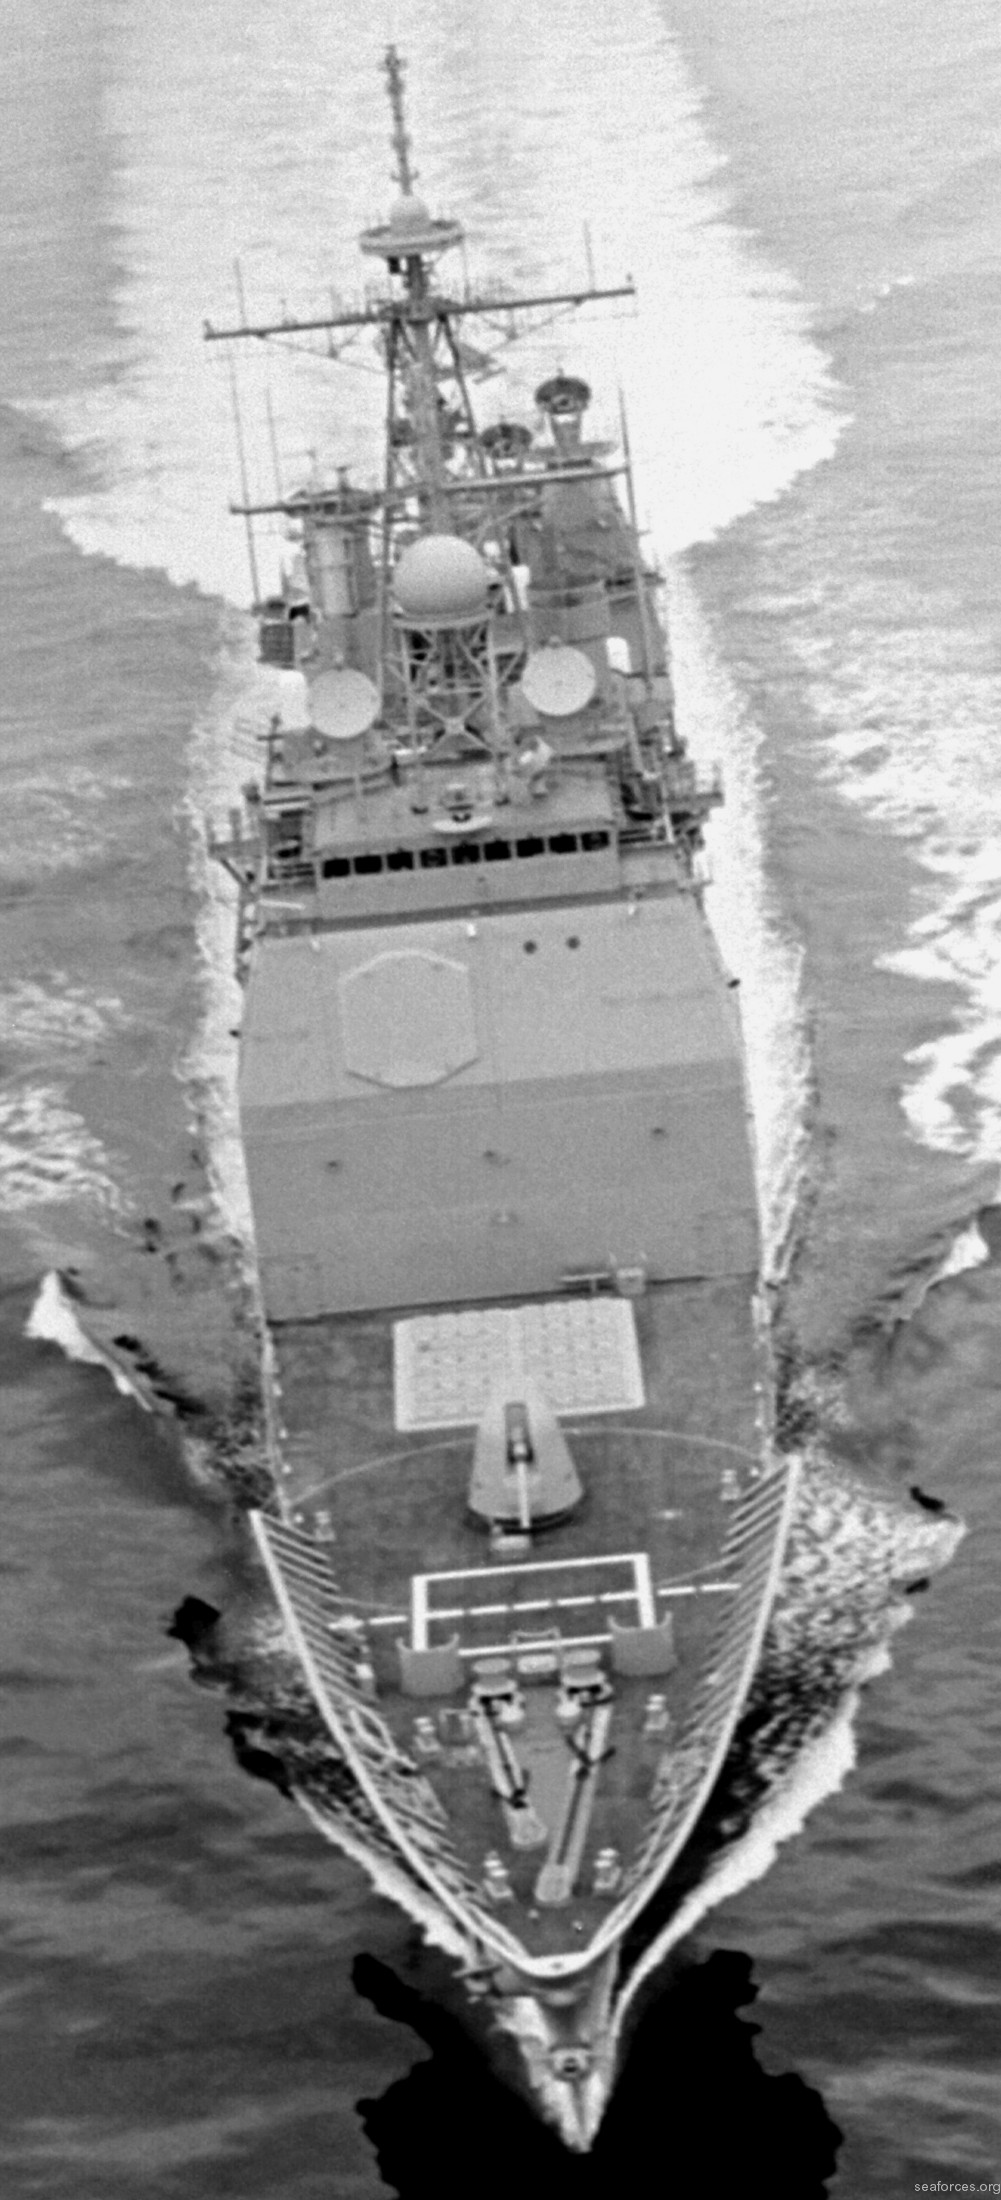 cg-69 uss vicksburg ticonderoga class guided missile cruiser us navy 55